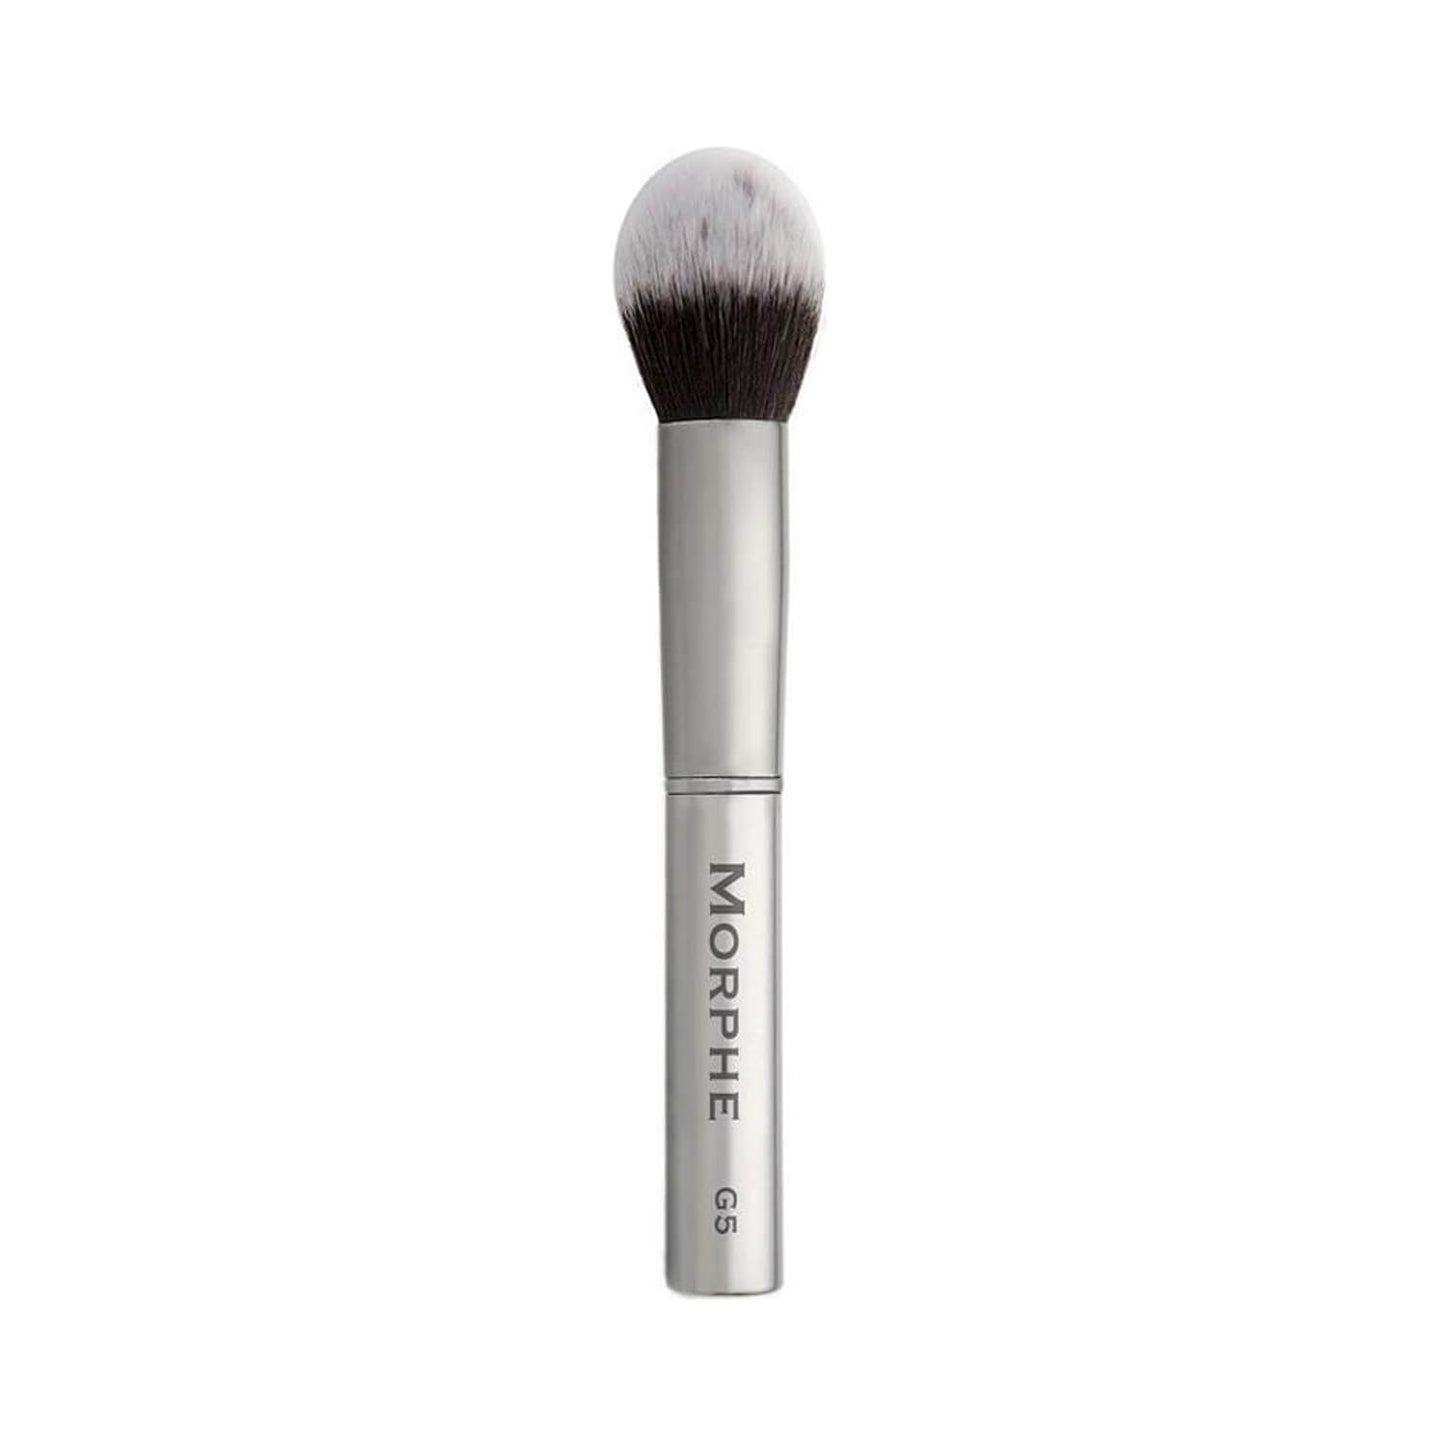 Morphe Cosmetics G5 Pointed Powder Brush